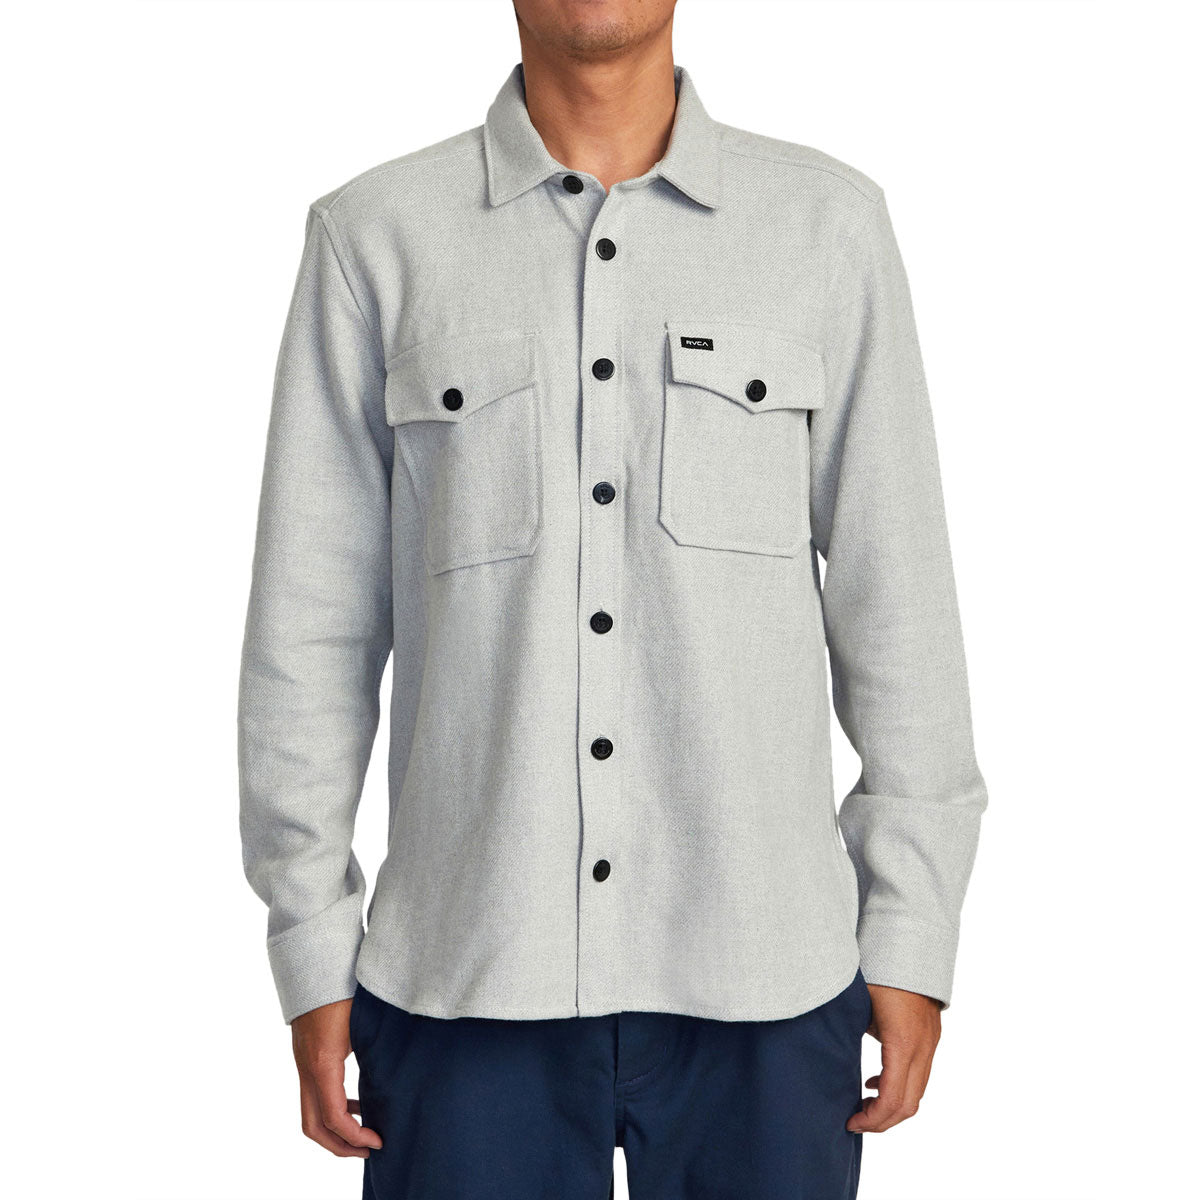 RVCA Va Cpo Long Sleeve Shirt - Grey Marle image 1